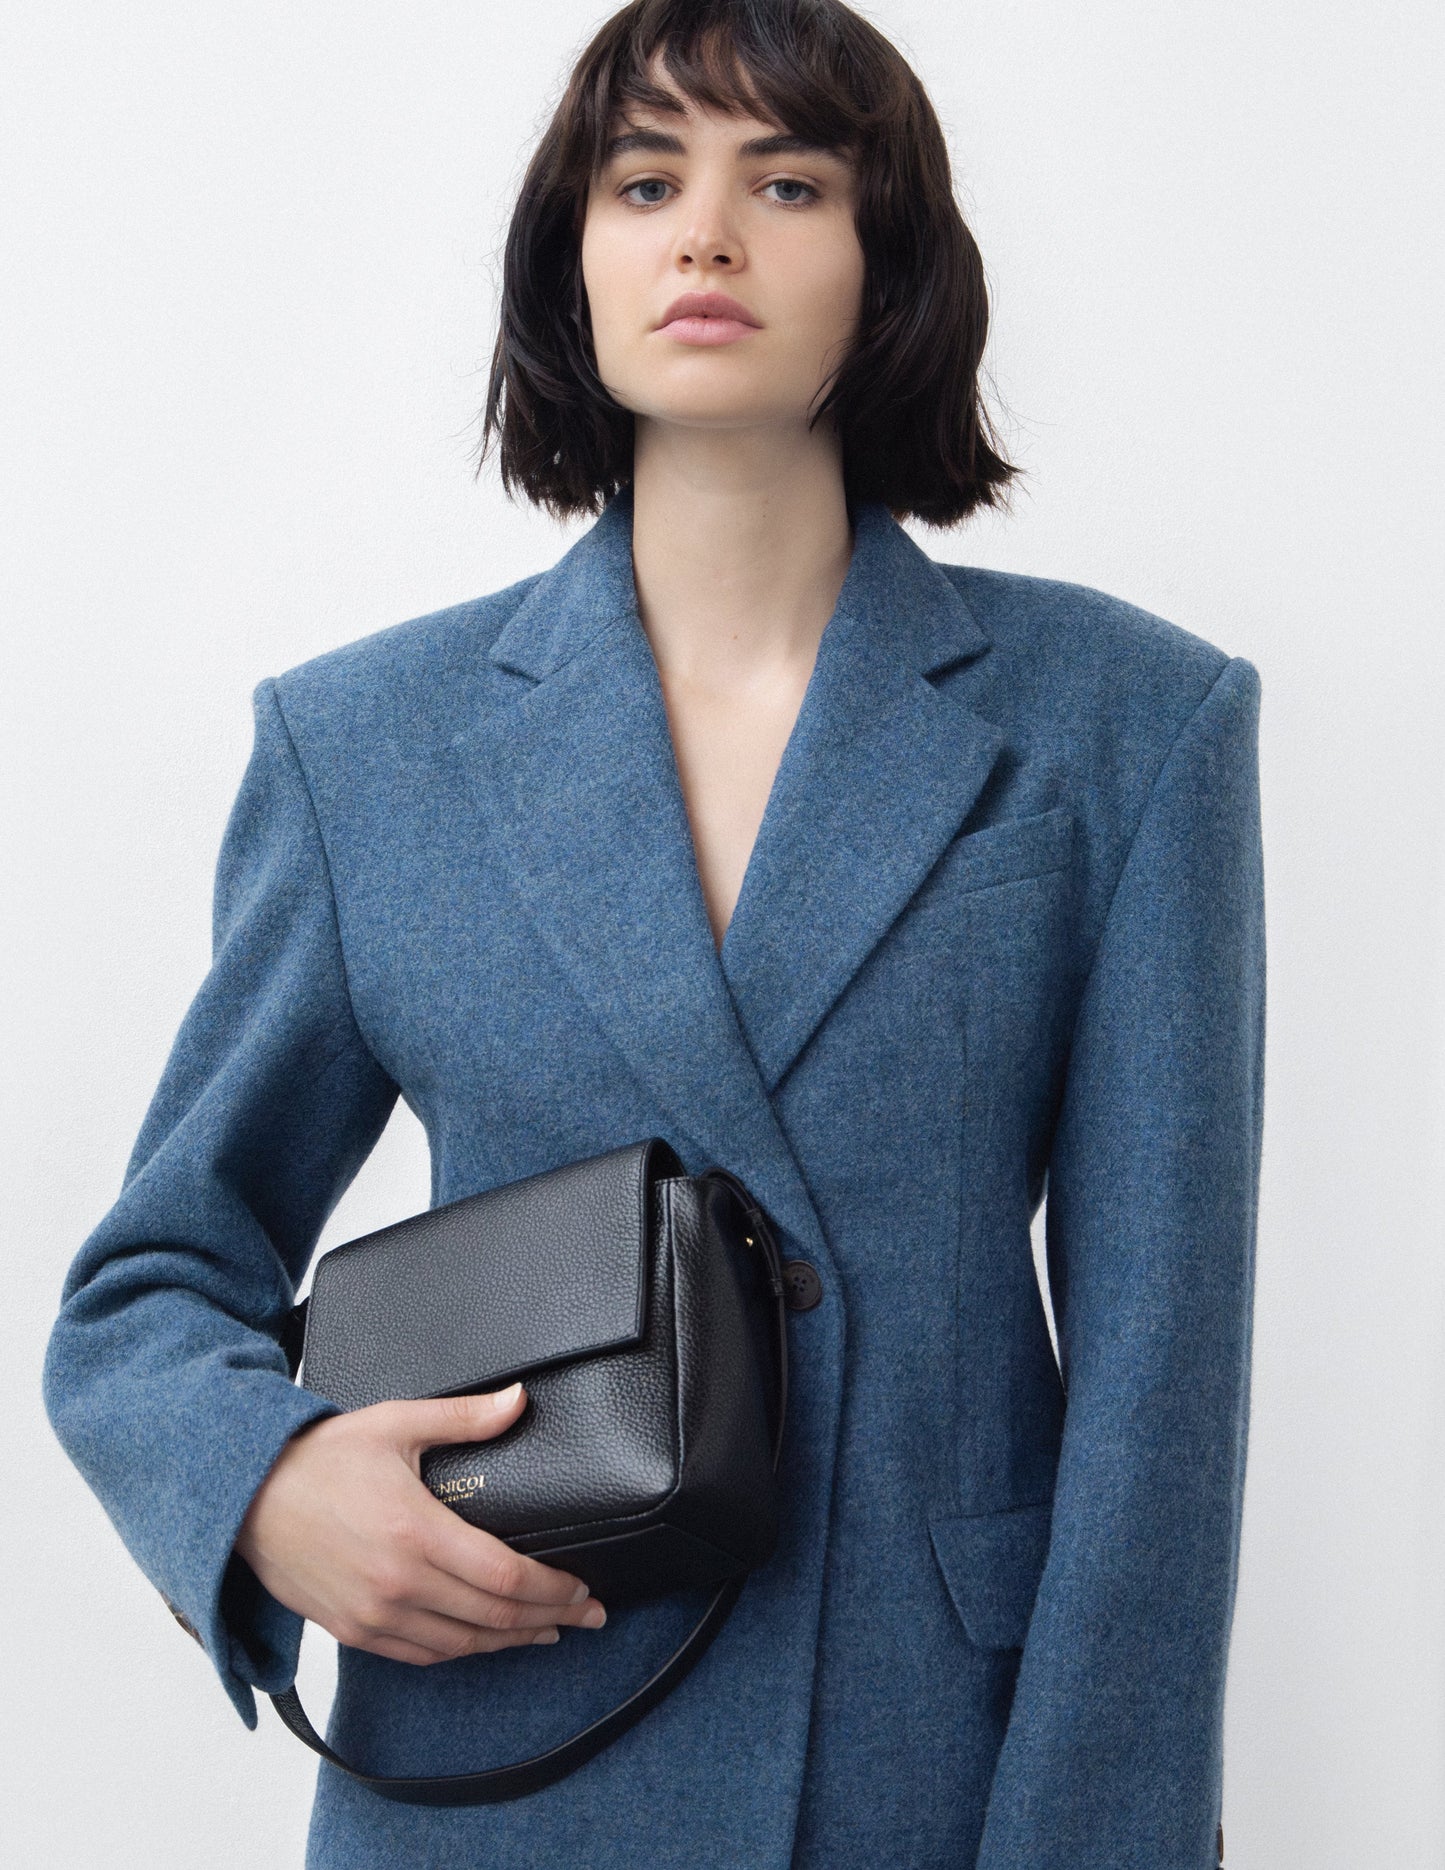 CNicol Black Leather Fia Bag held by woman in blue Blazer